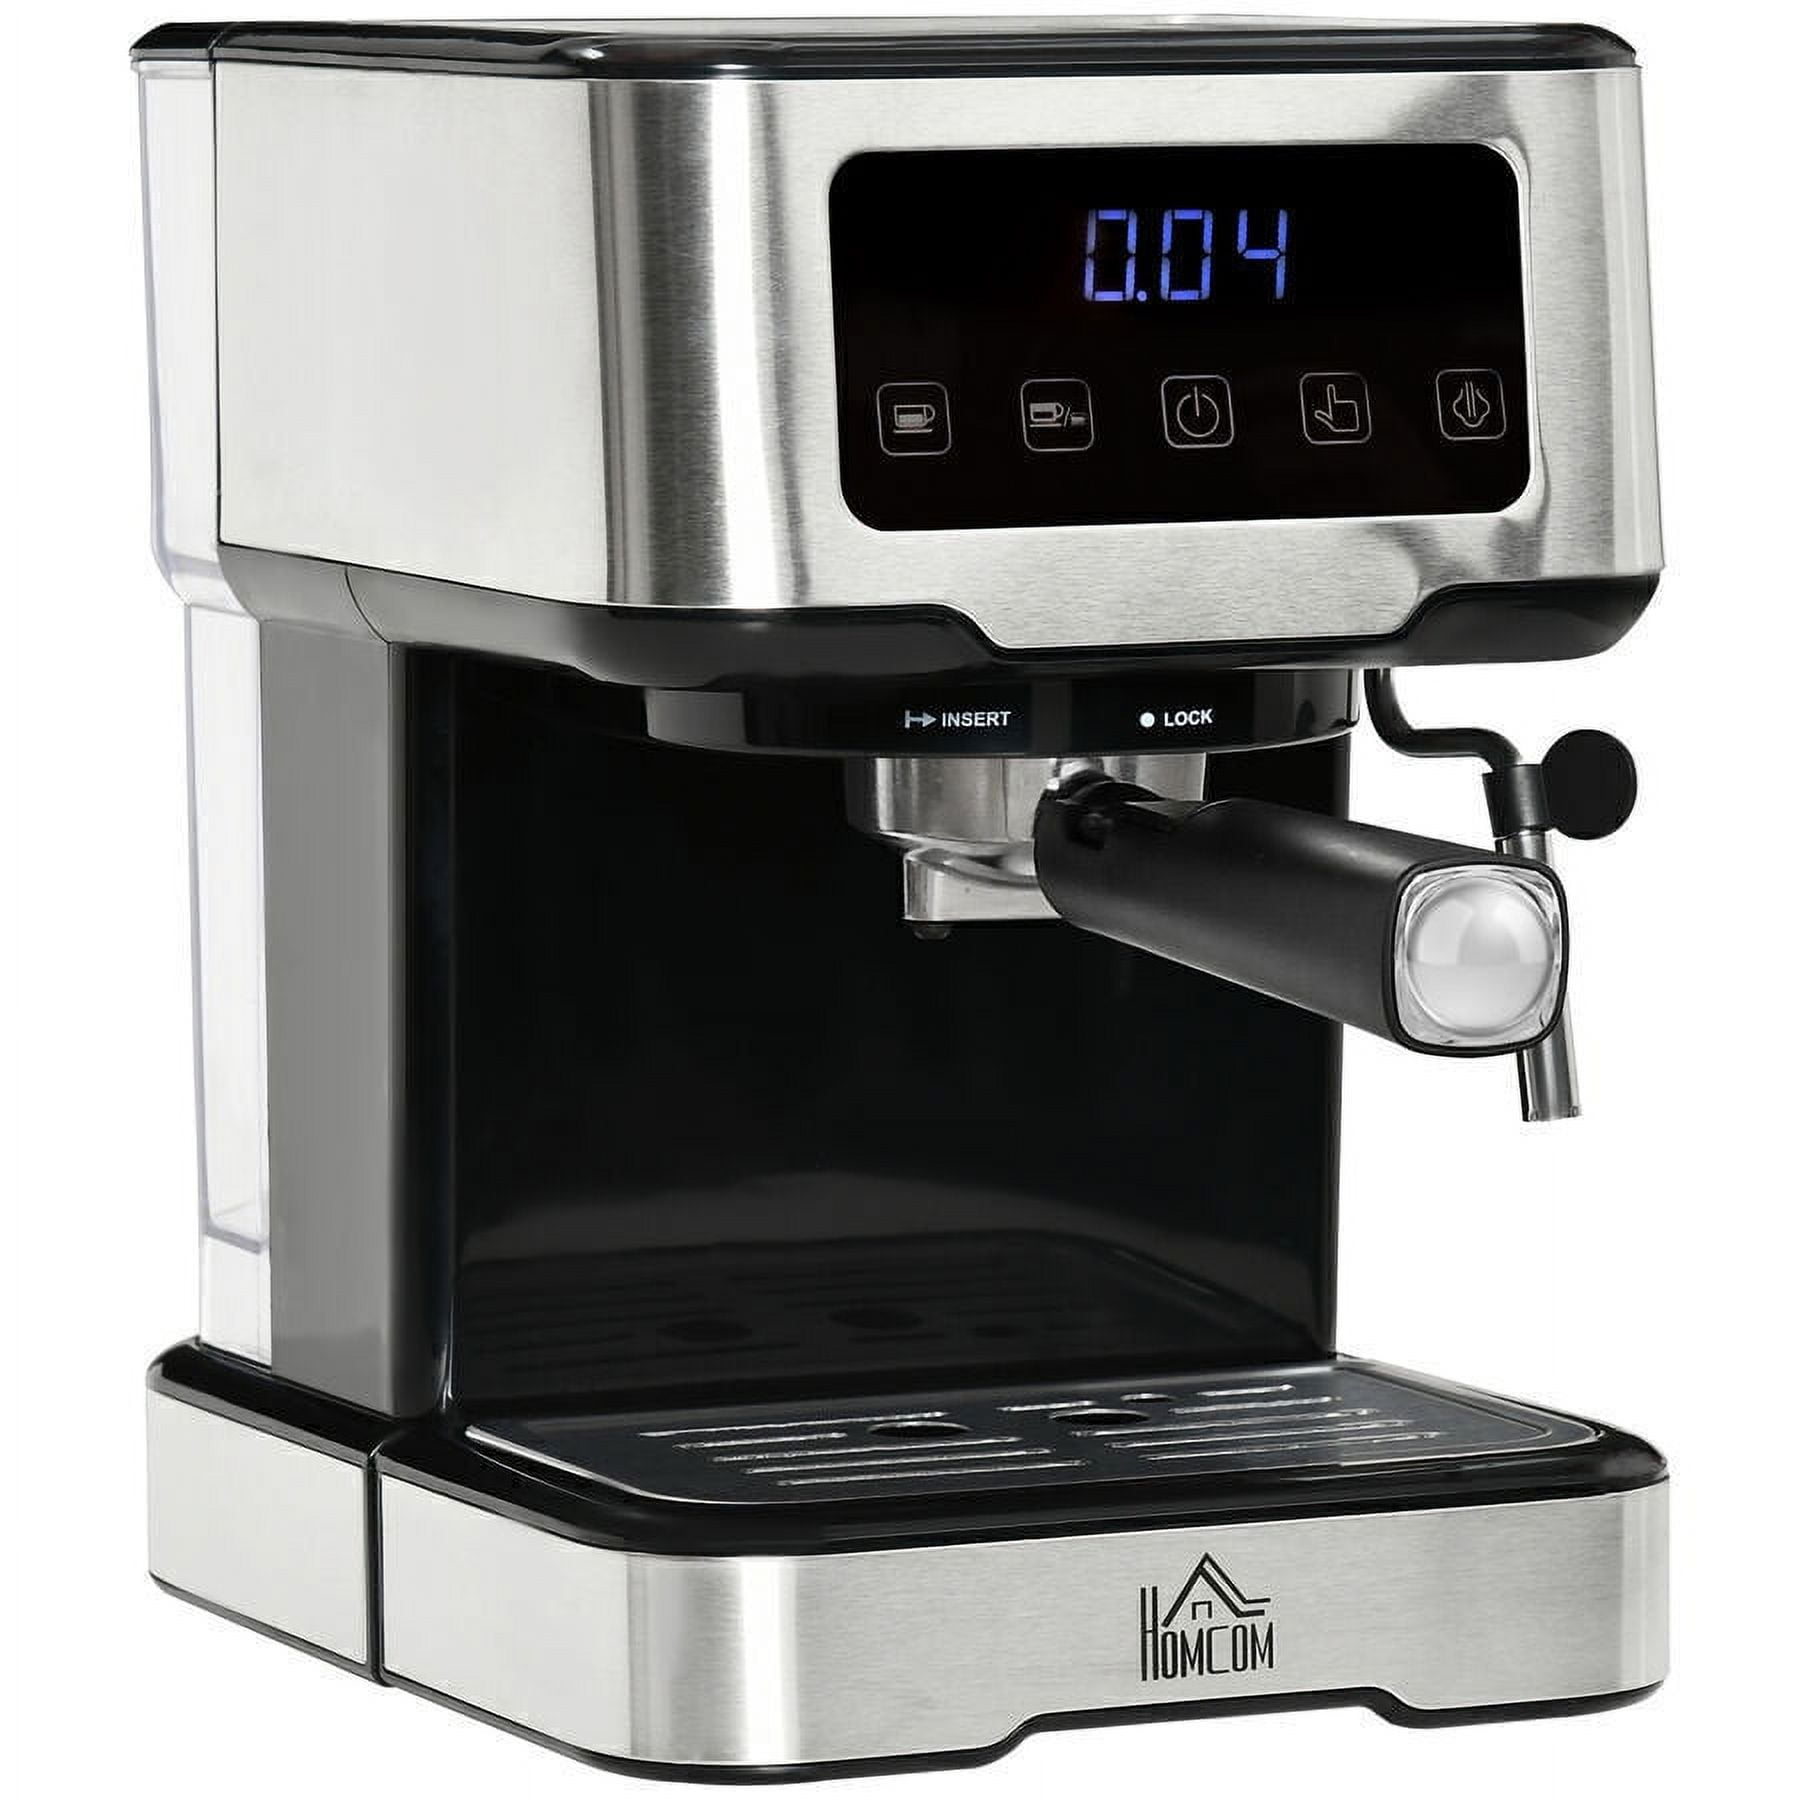 Espresso And Coffee Machine, 3 In 1 Combination 15 Bar Espresso Machine And  Single Serve Coffee Maker With Coffee Mug, Milk Frother For Cappuccino And  Latte, Black – Casazo